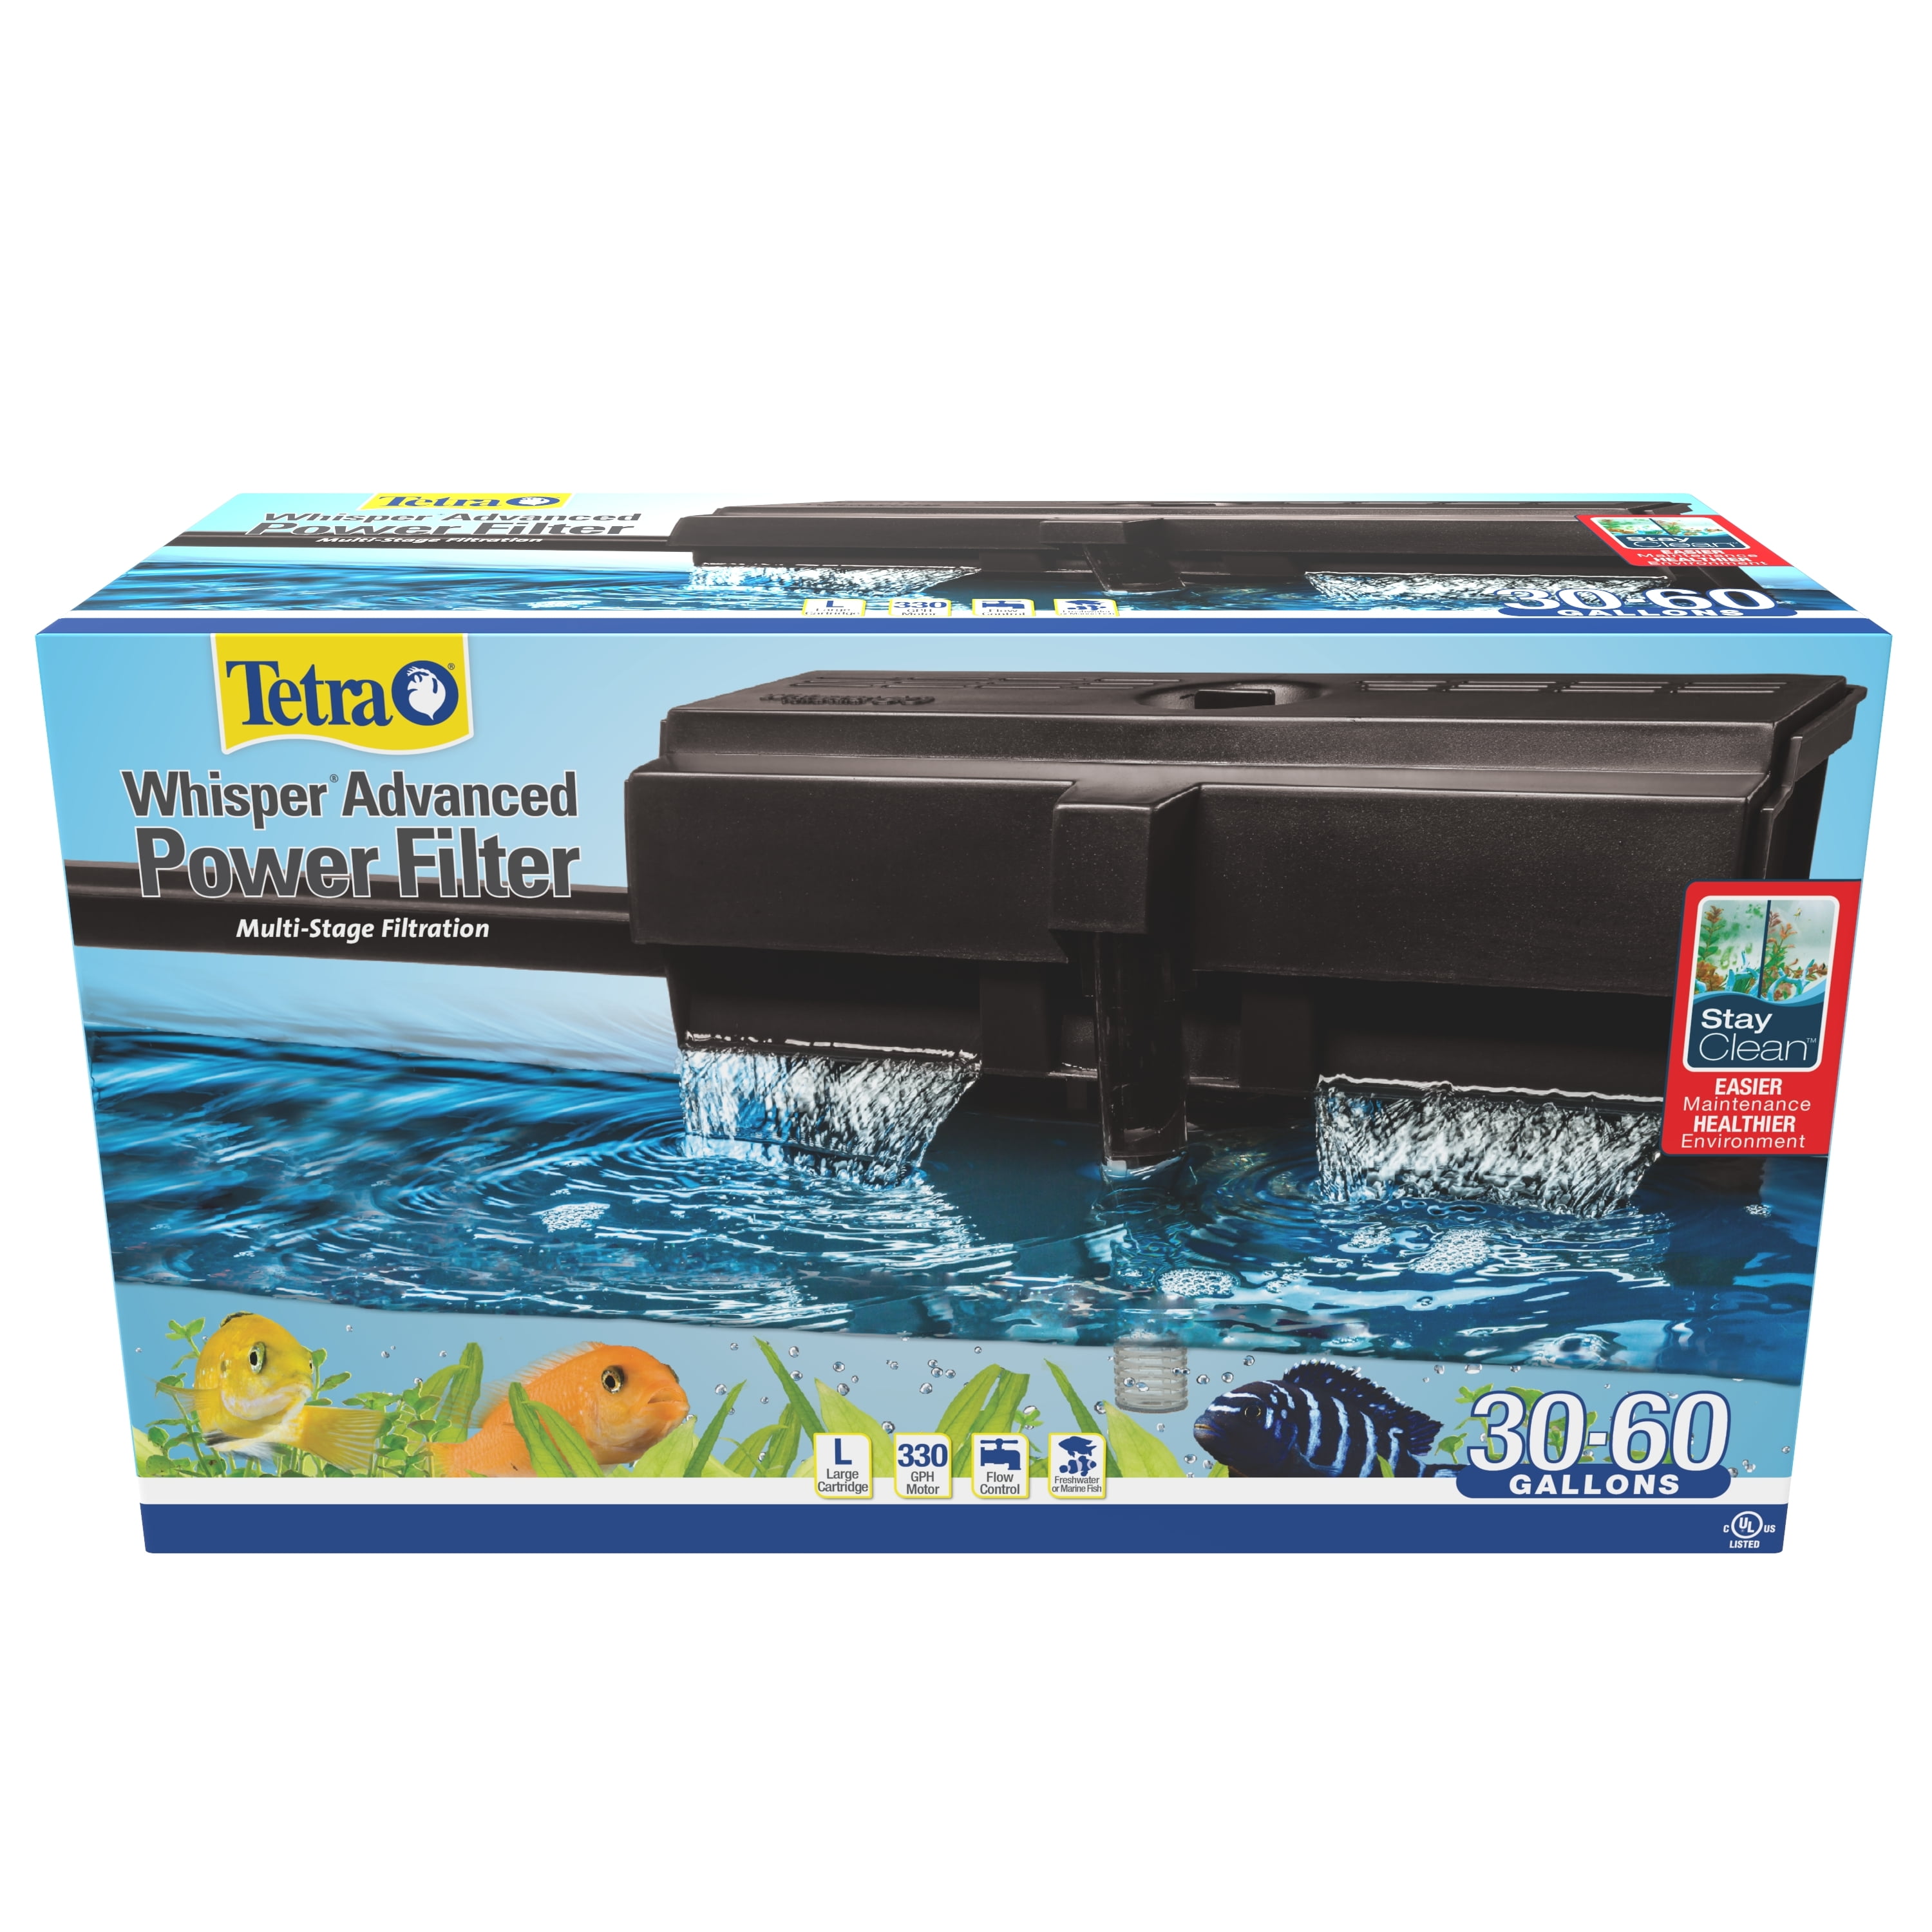 Tetra Whisper Power Filter for Aquariums, 30-60 Gallon